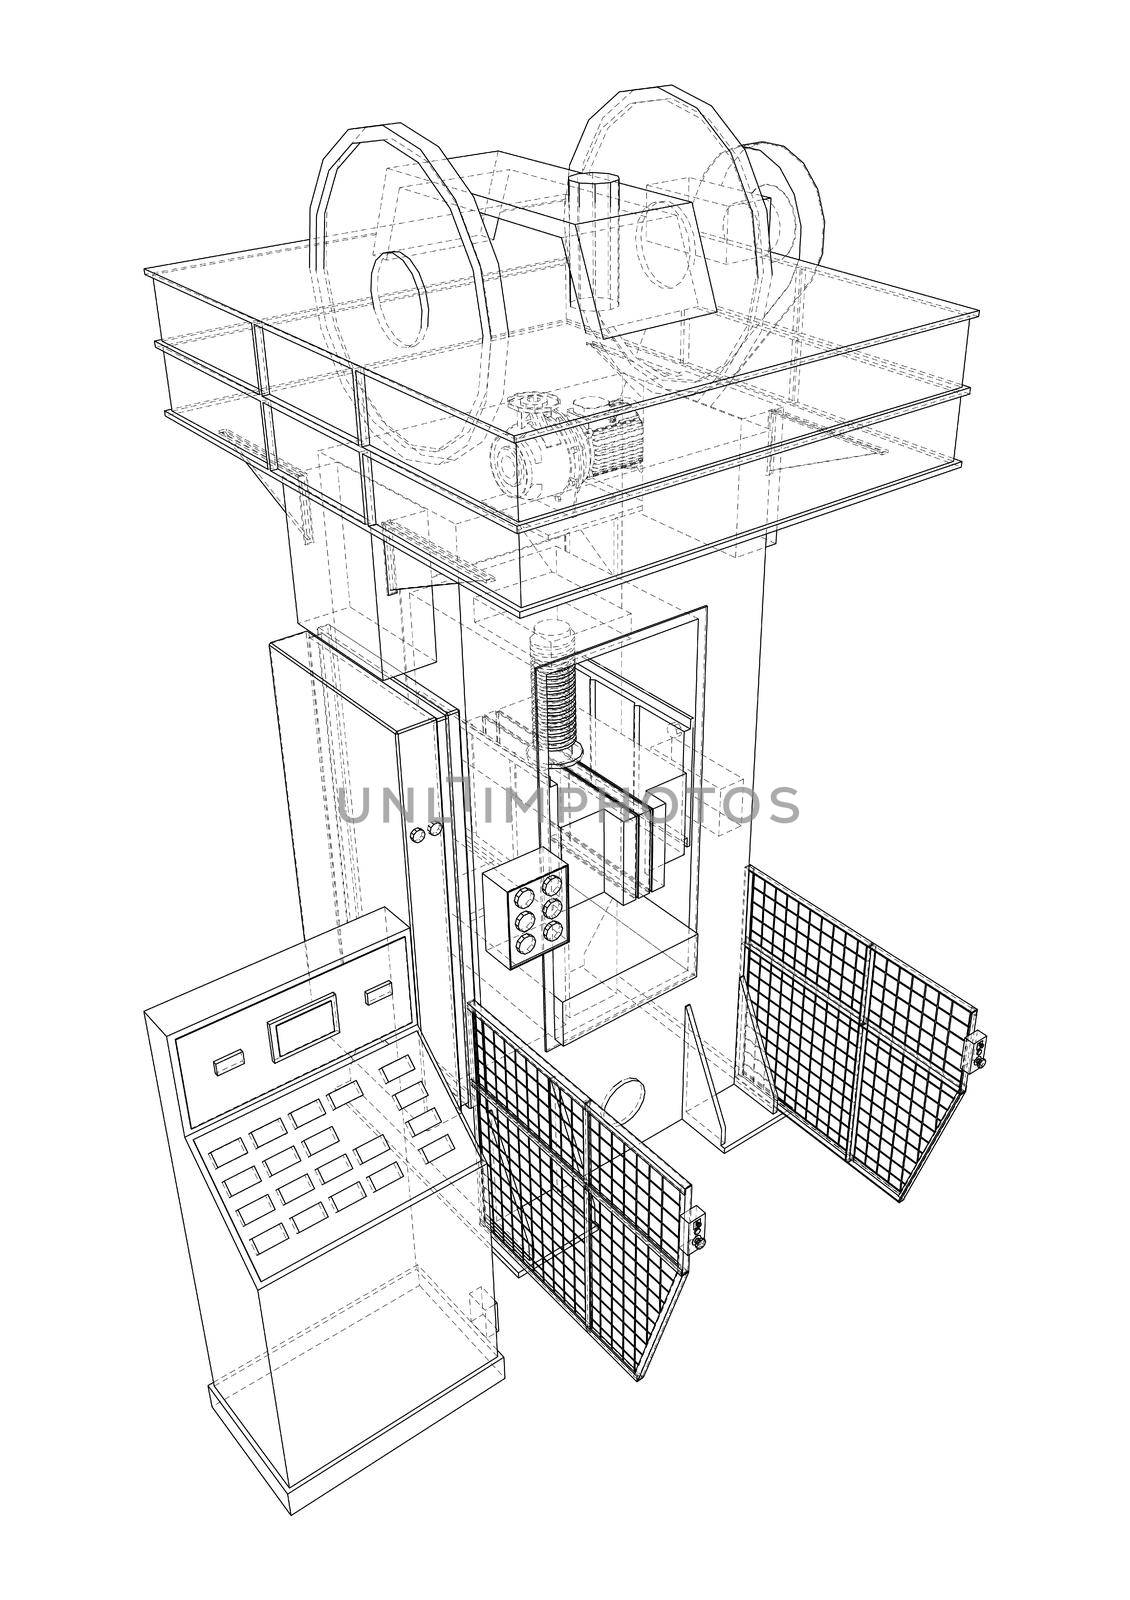 Hydraulic Press. 3d illustration by cherezoff